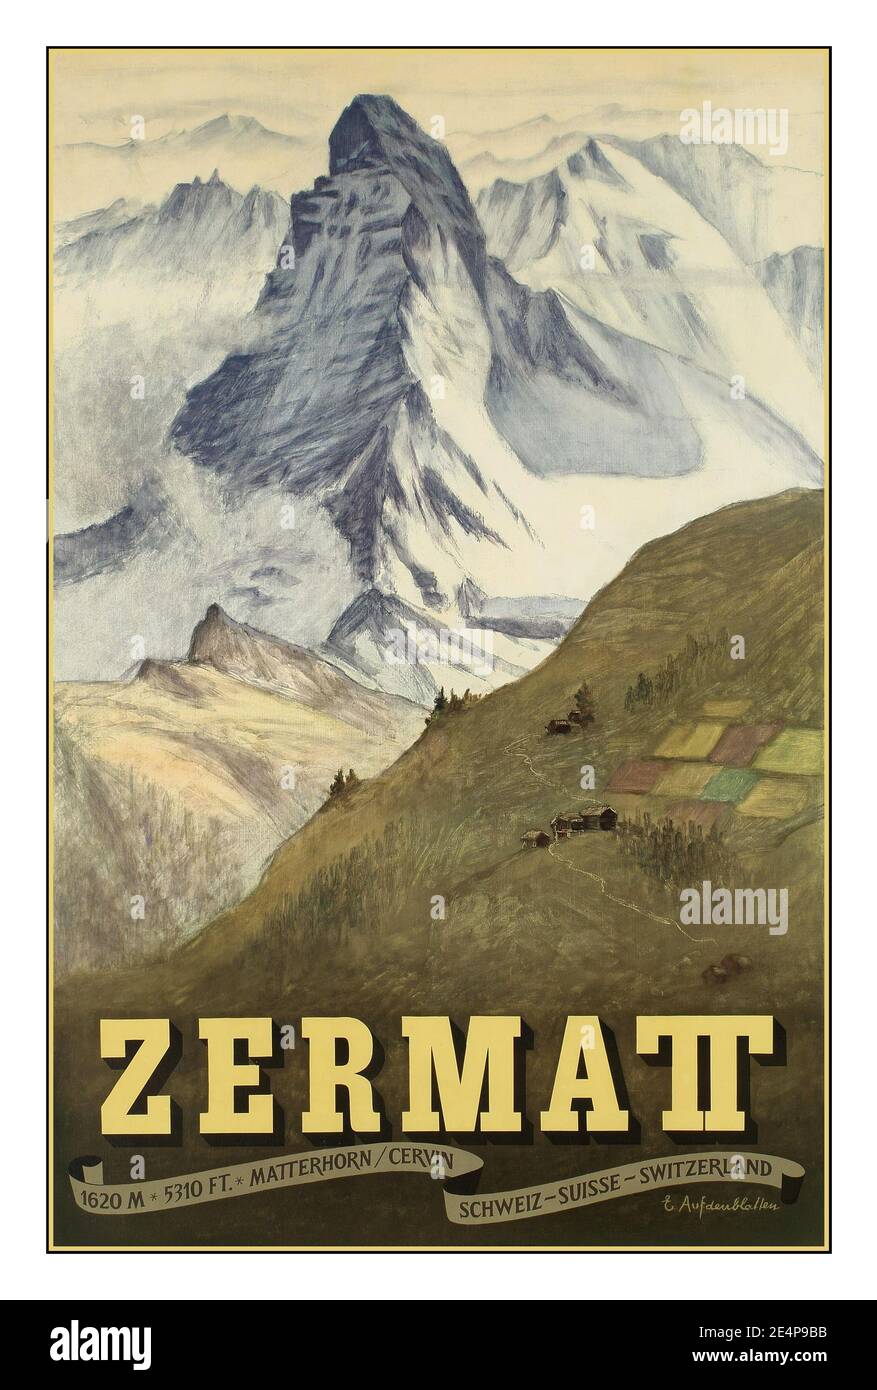 ZERMATT MATTERHORN Vintage Travel Poster by Emil Aufdenblatten Zermatt Mountain Region Lithograph poster printed by H. Vantobel, Felgmellen Imprime en Suisse 1956 Stock Photo - Alamy